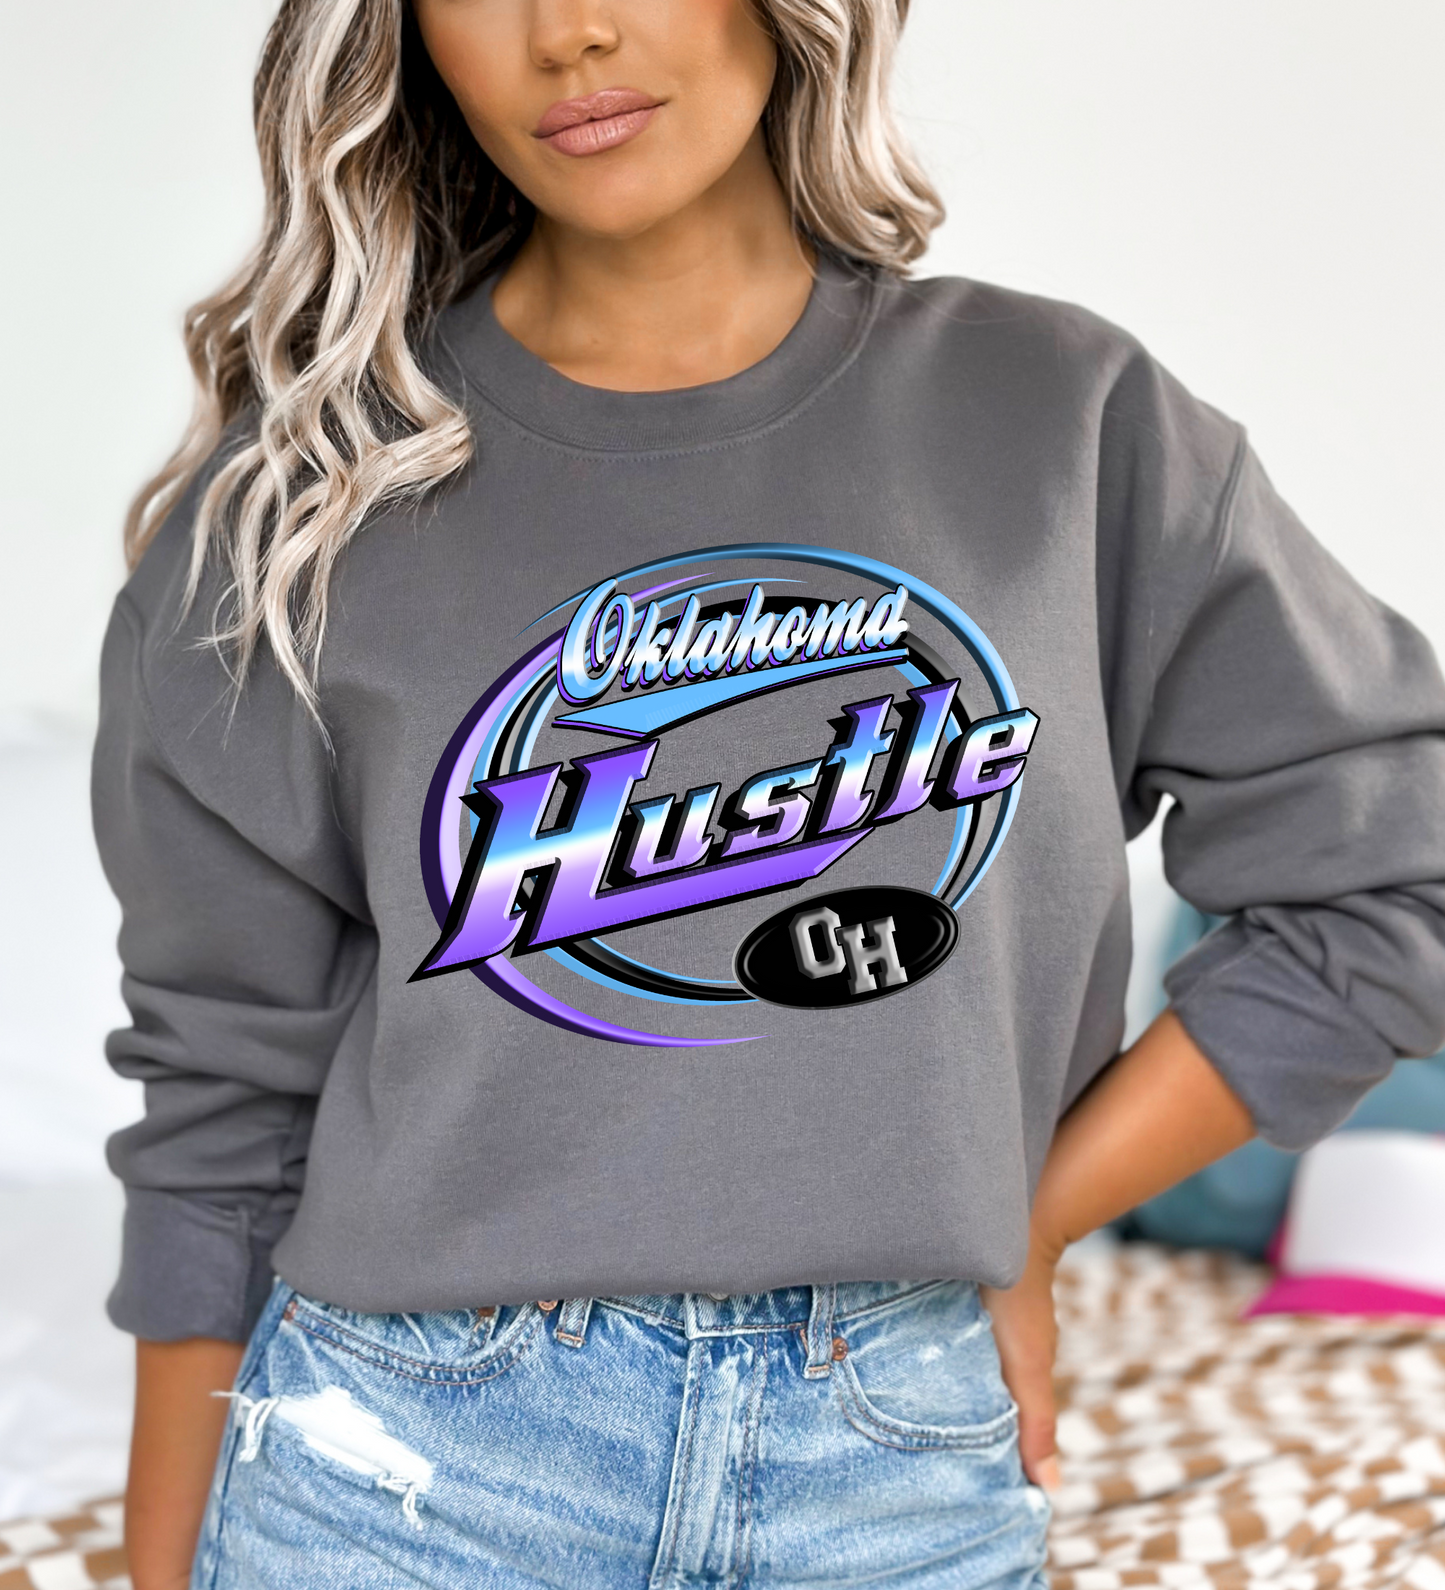 Oklahoma Hustle "dad logo" (Gildan)